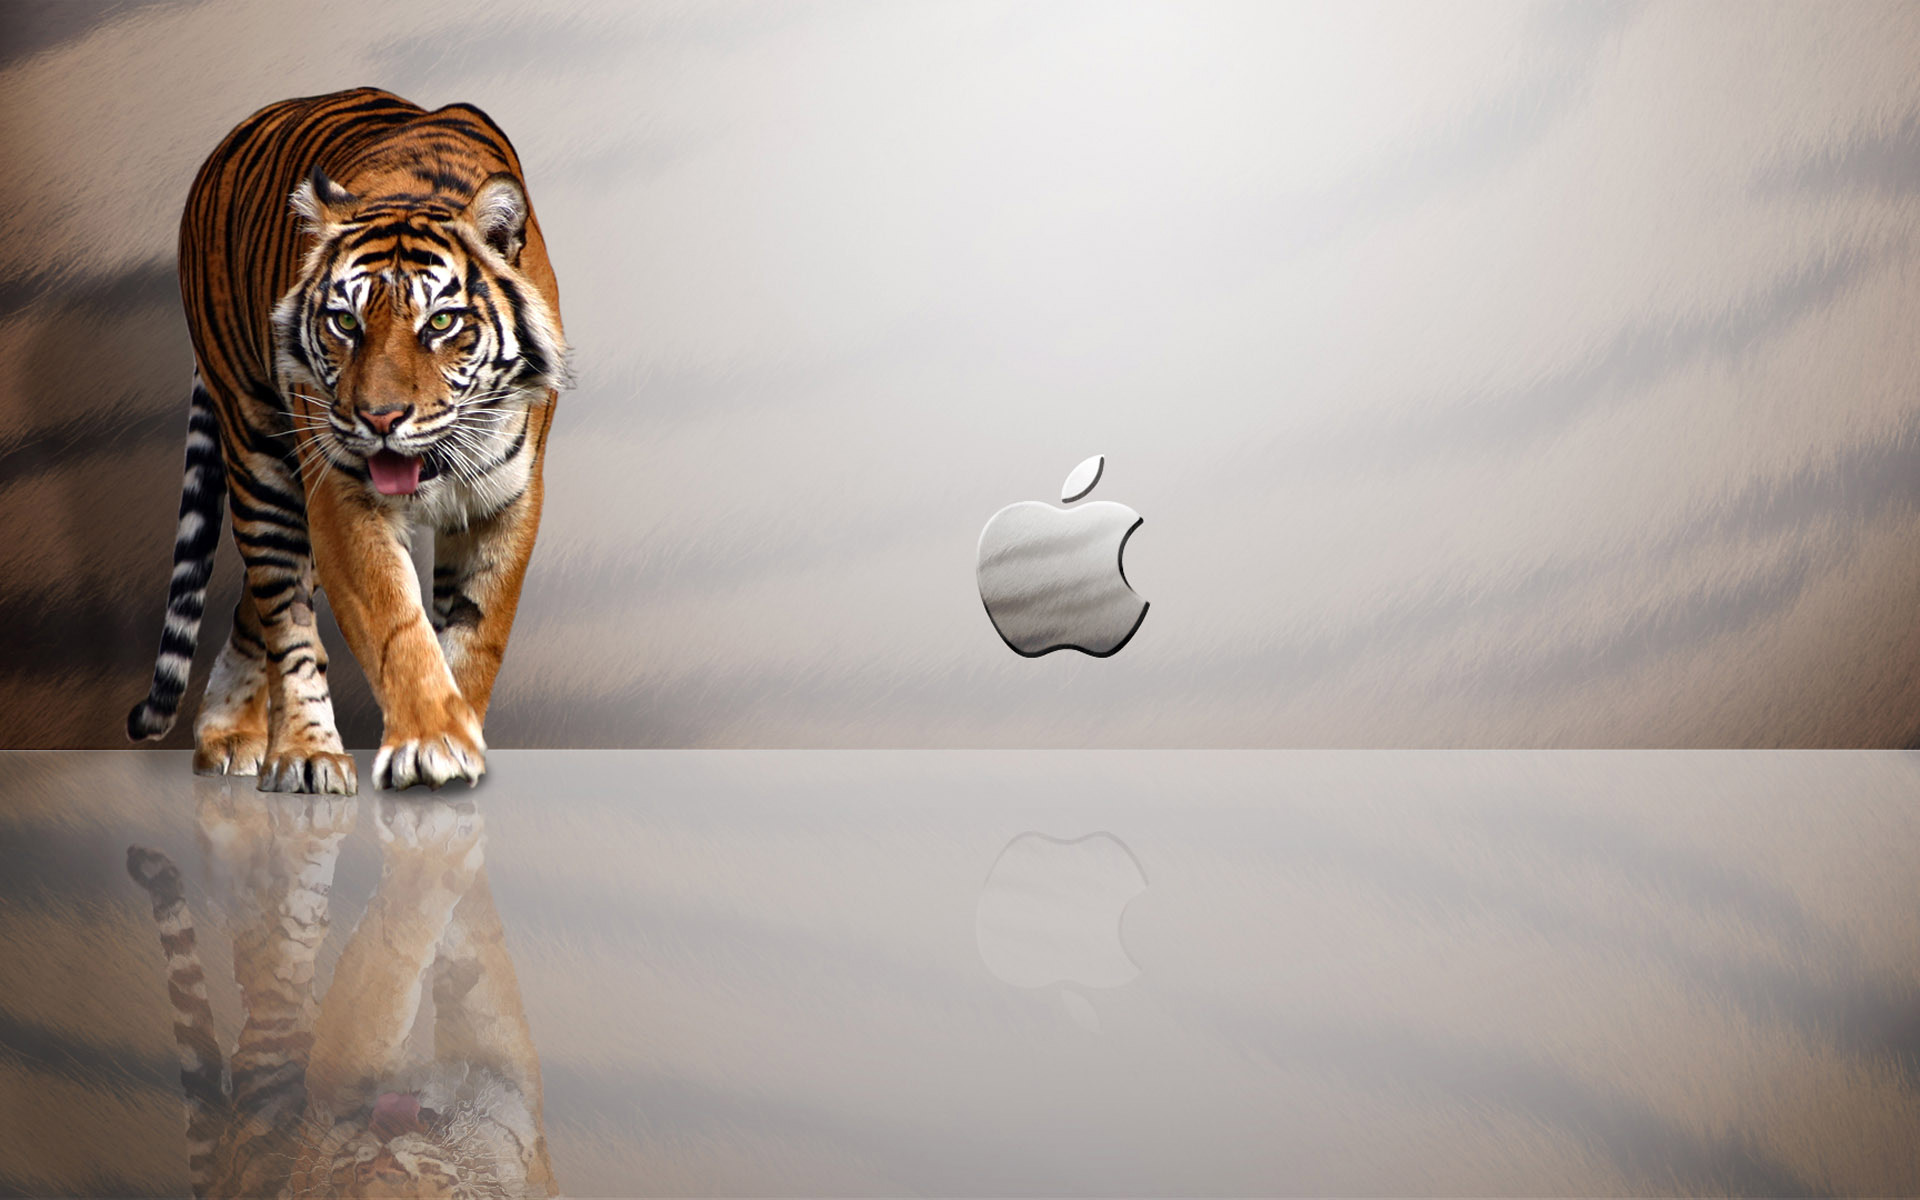 Tiger Mac OS desktop hd wallpaper High Quality WallpapersWallpaper